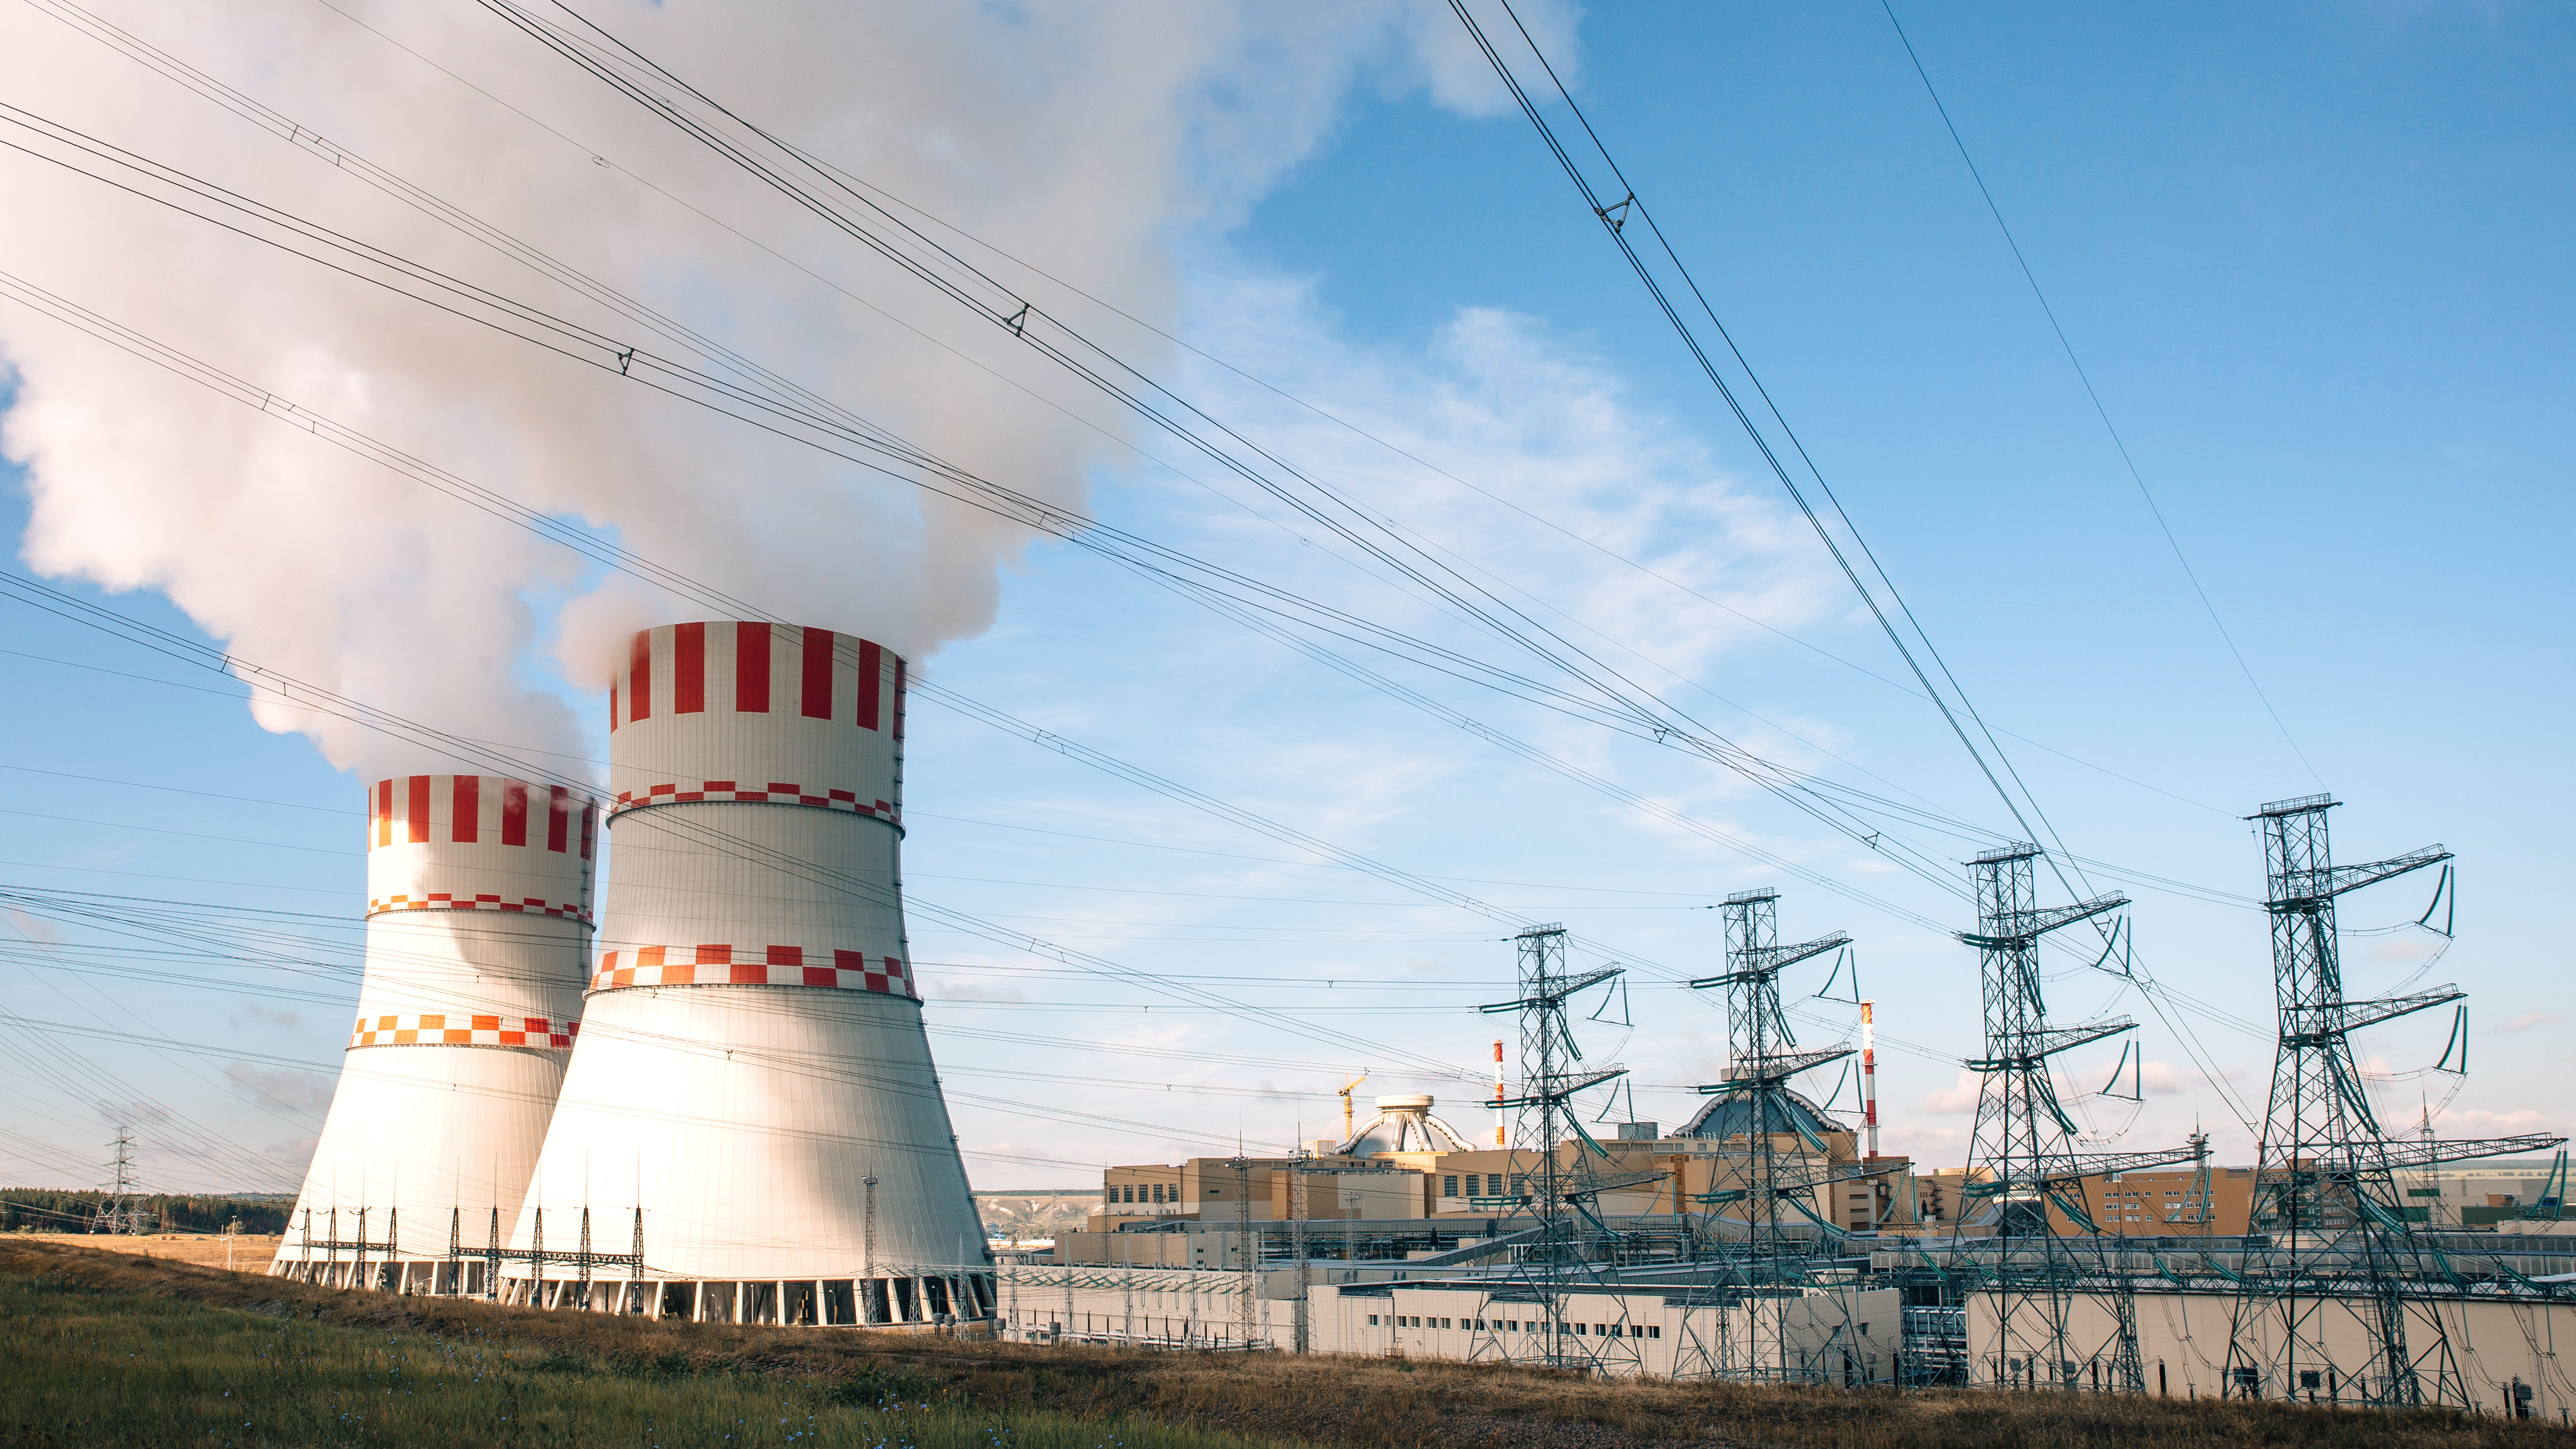 Rosenergoatom: Novovoronezh-2 NPP’s newest power unit enters commercial operation 30 days ahead of schedule